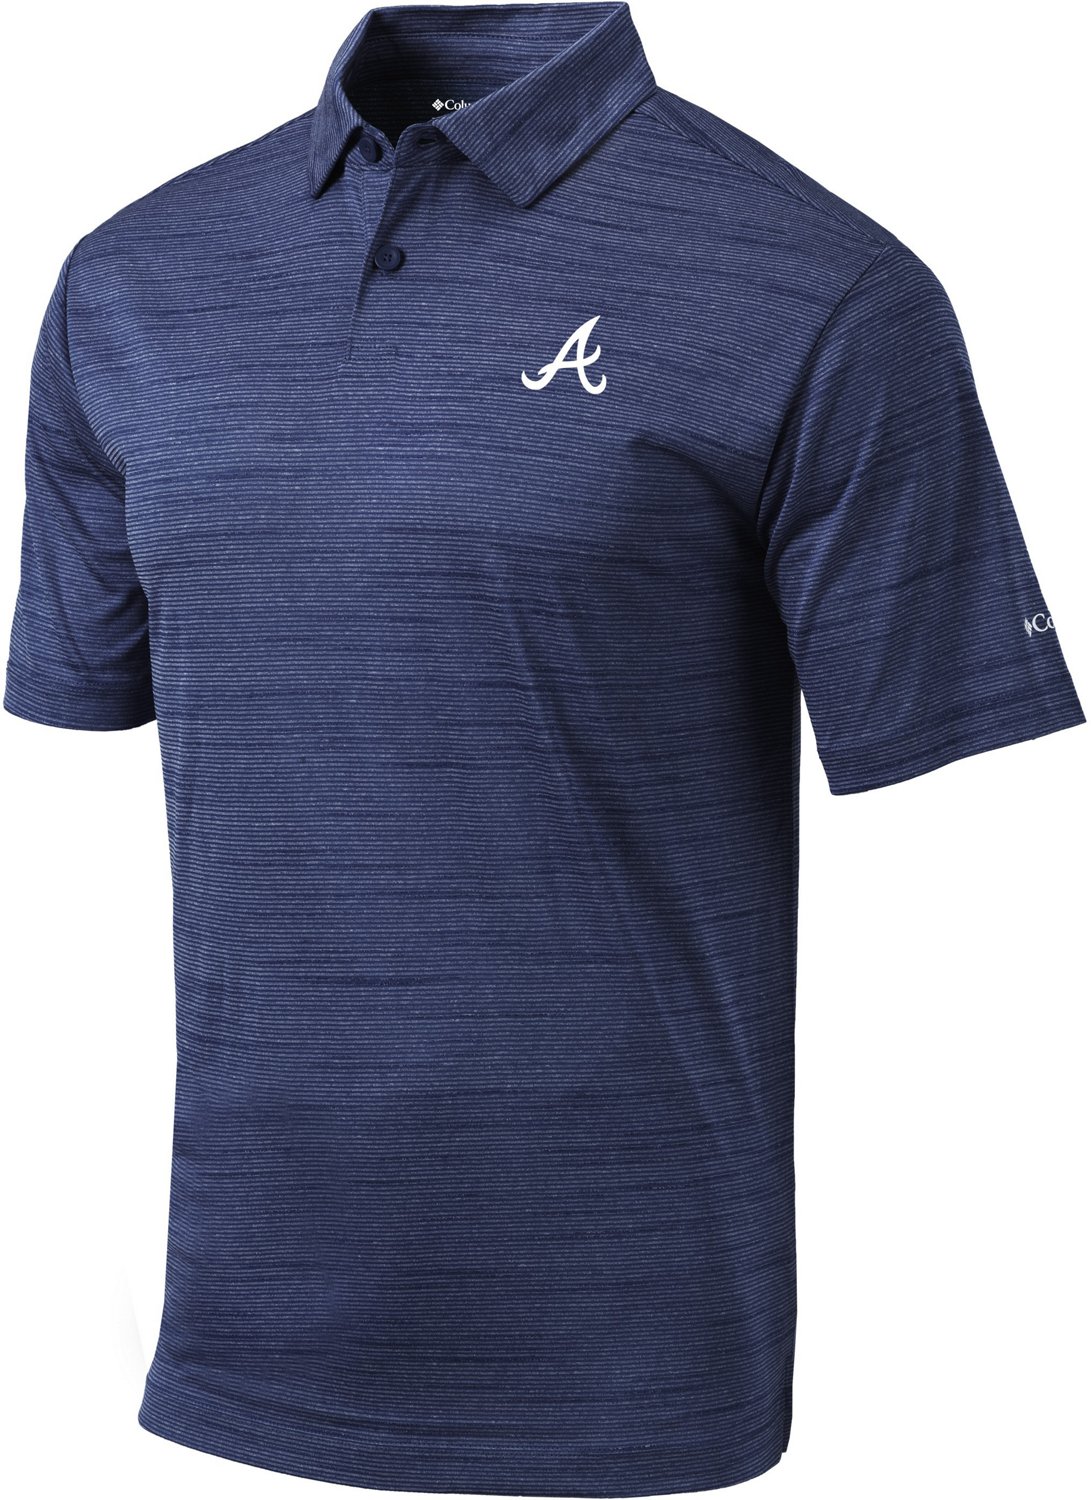 Braves Collared Shirts